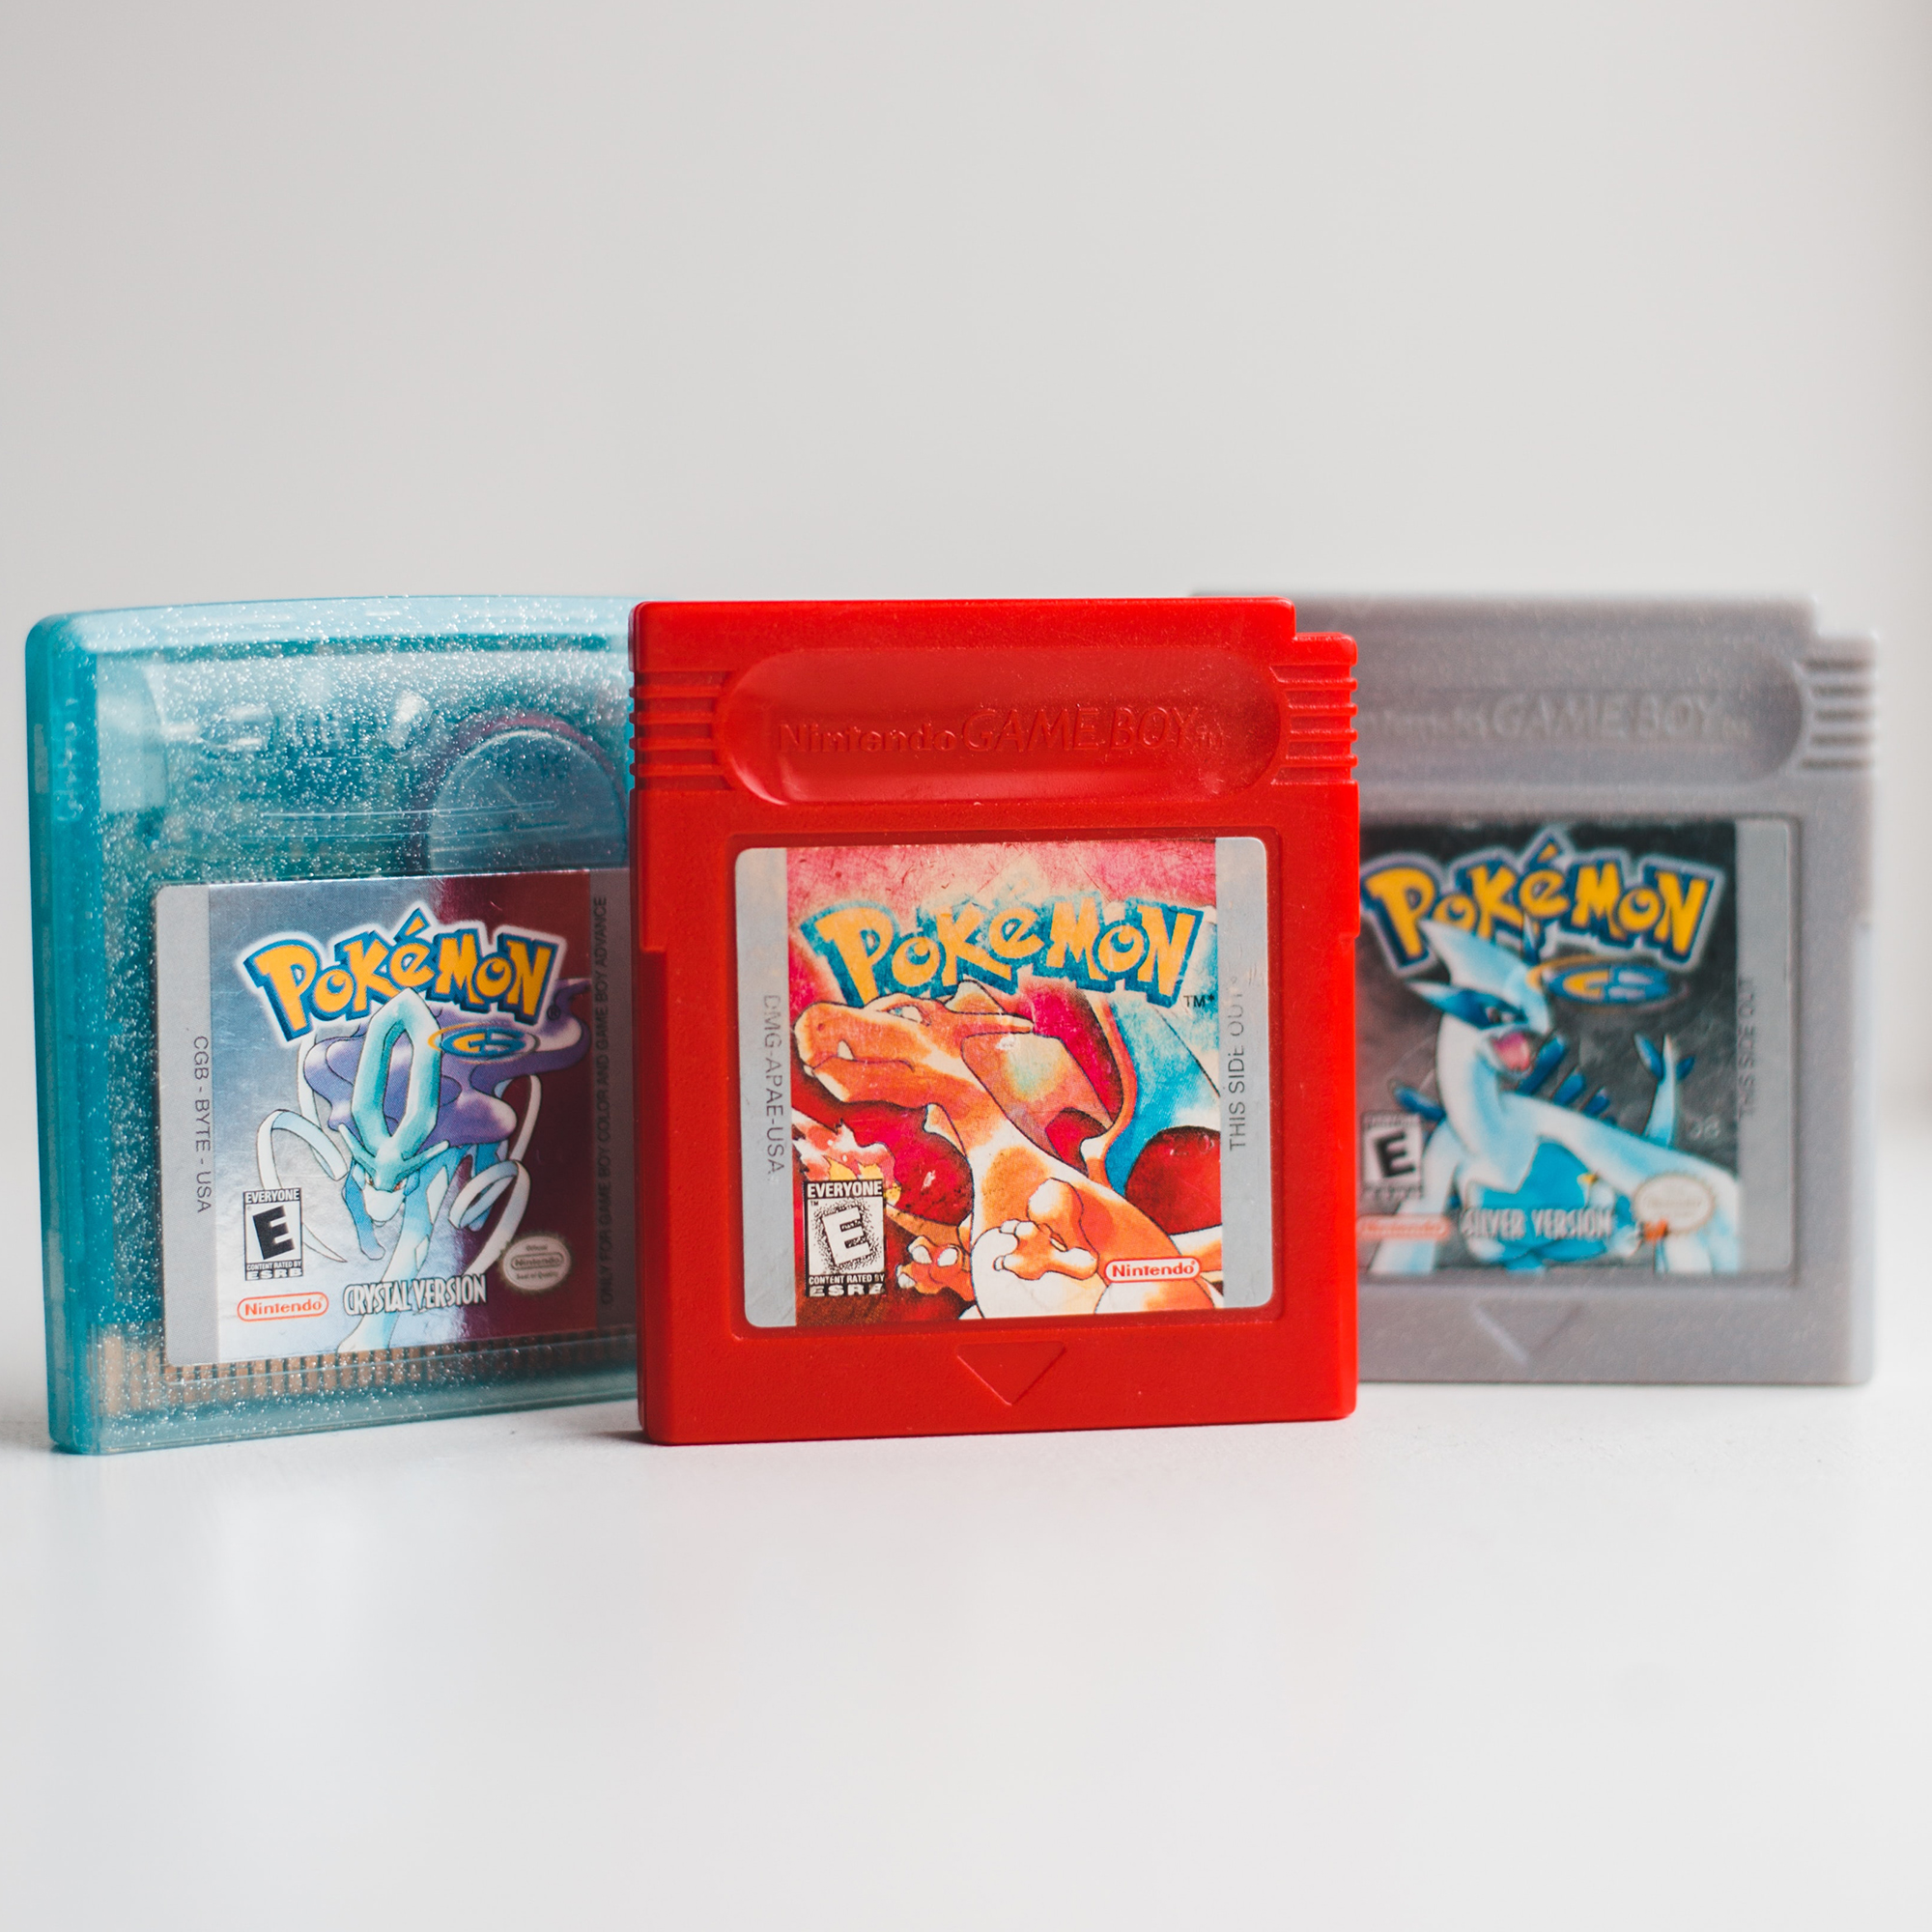 Nintendo Gameboy cartridges for Pokemon games. | Source: Unsplash